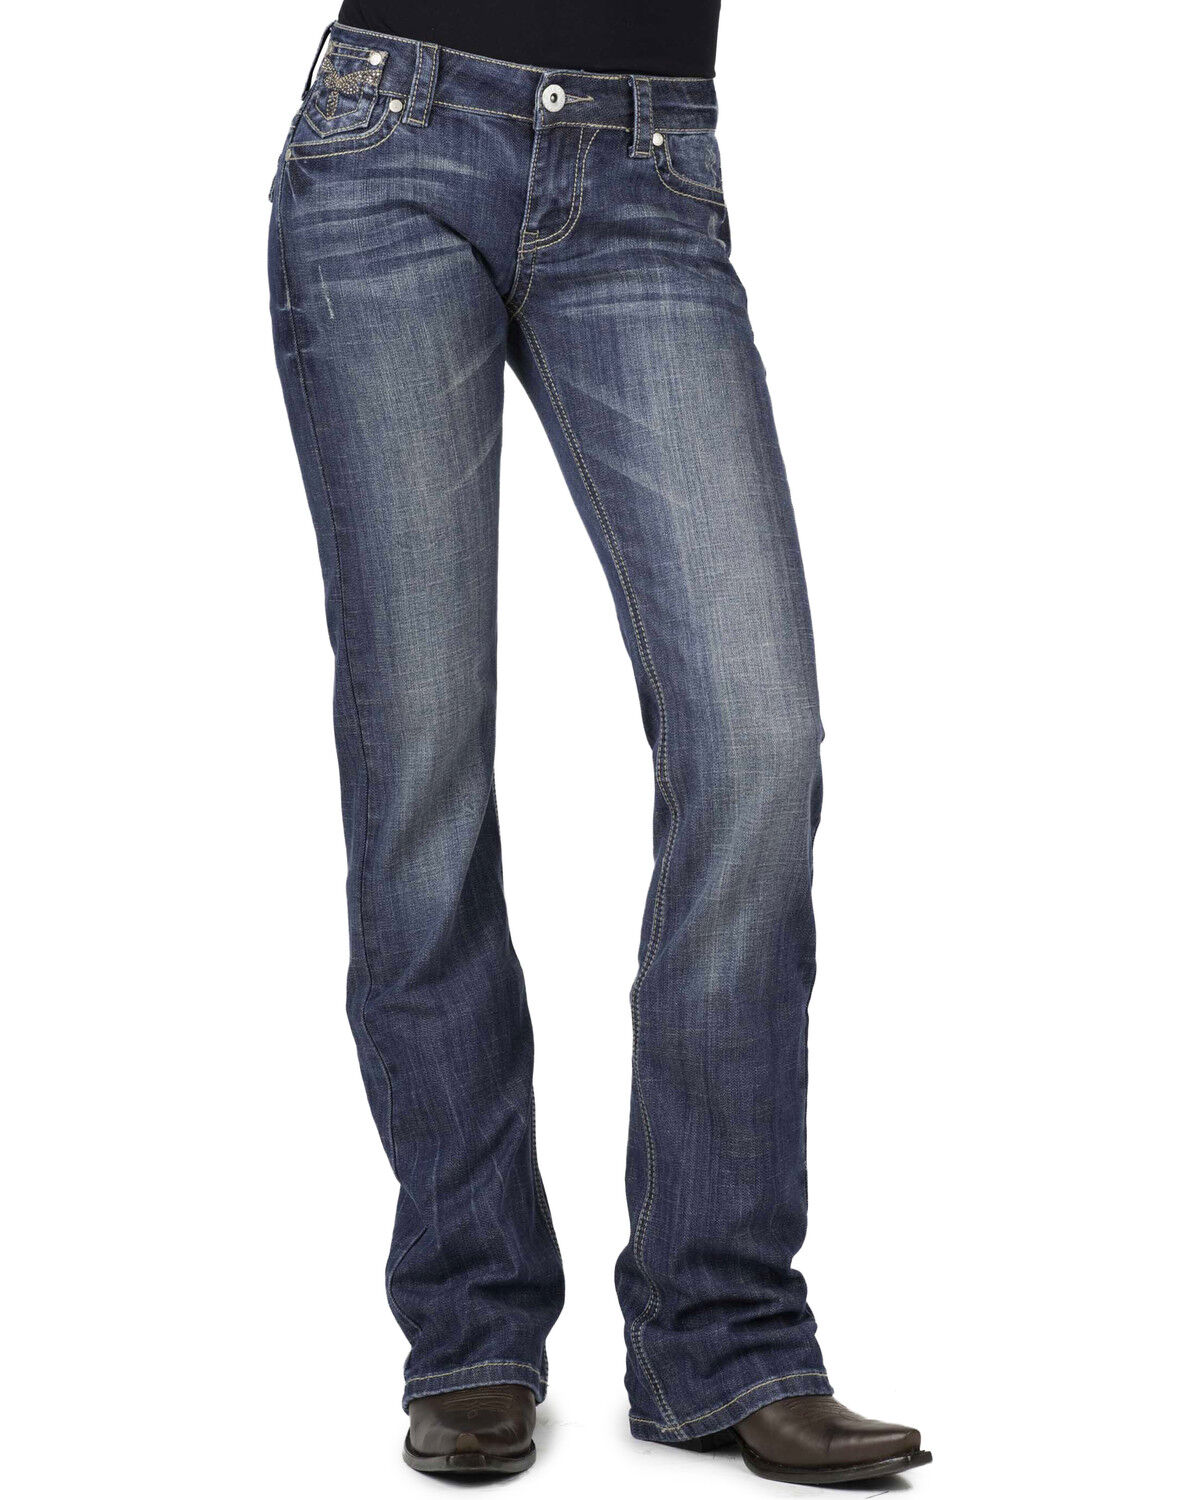 Stetson Womens Jeans Size Chart